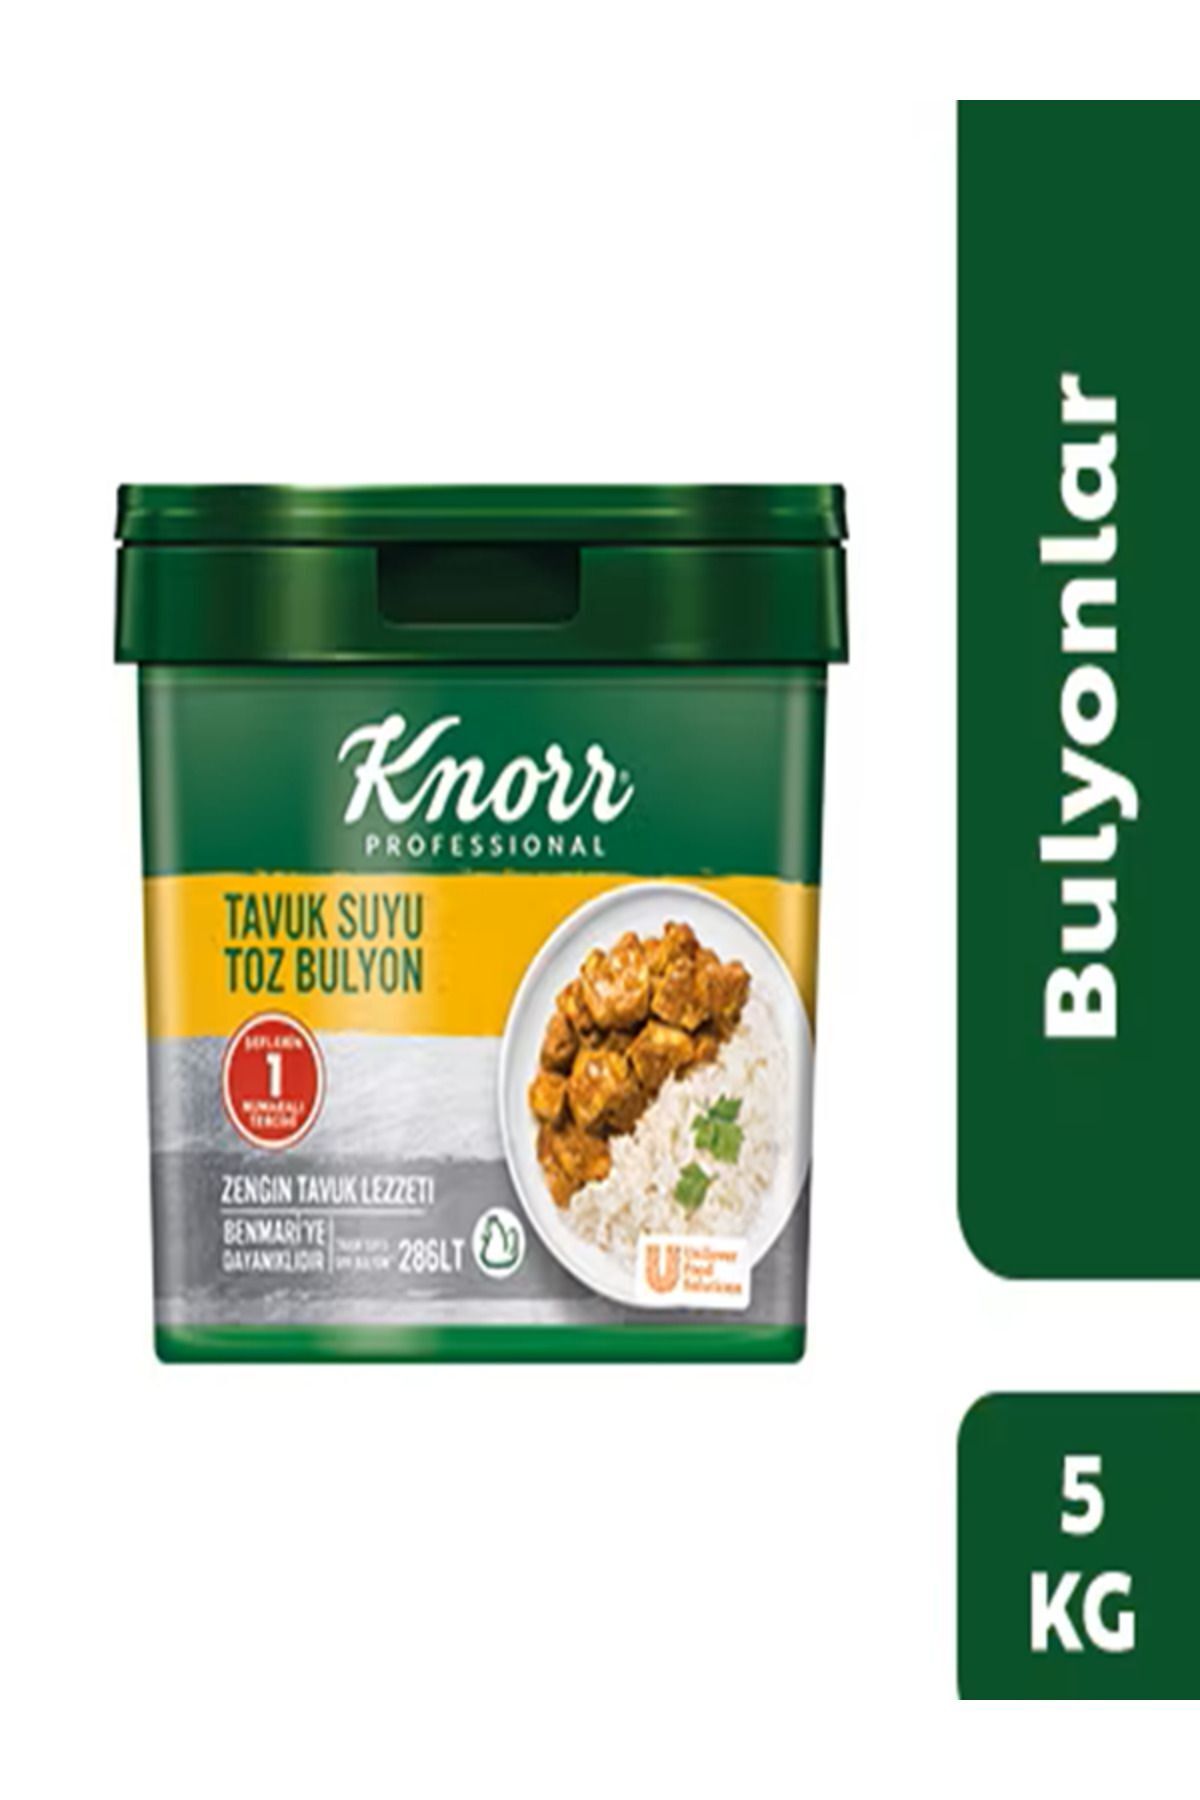 Knorr TAVUK SUYU BULYON